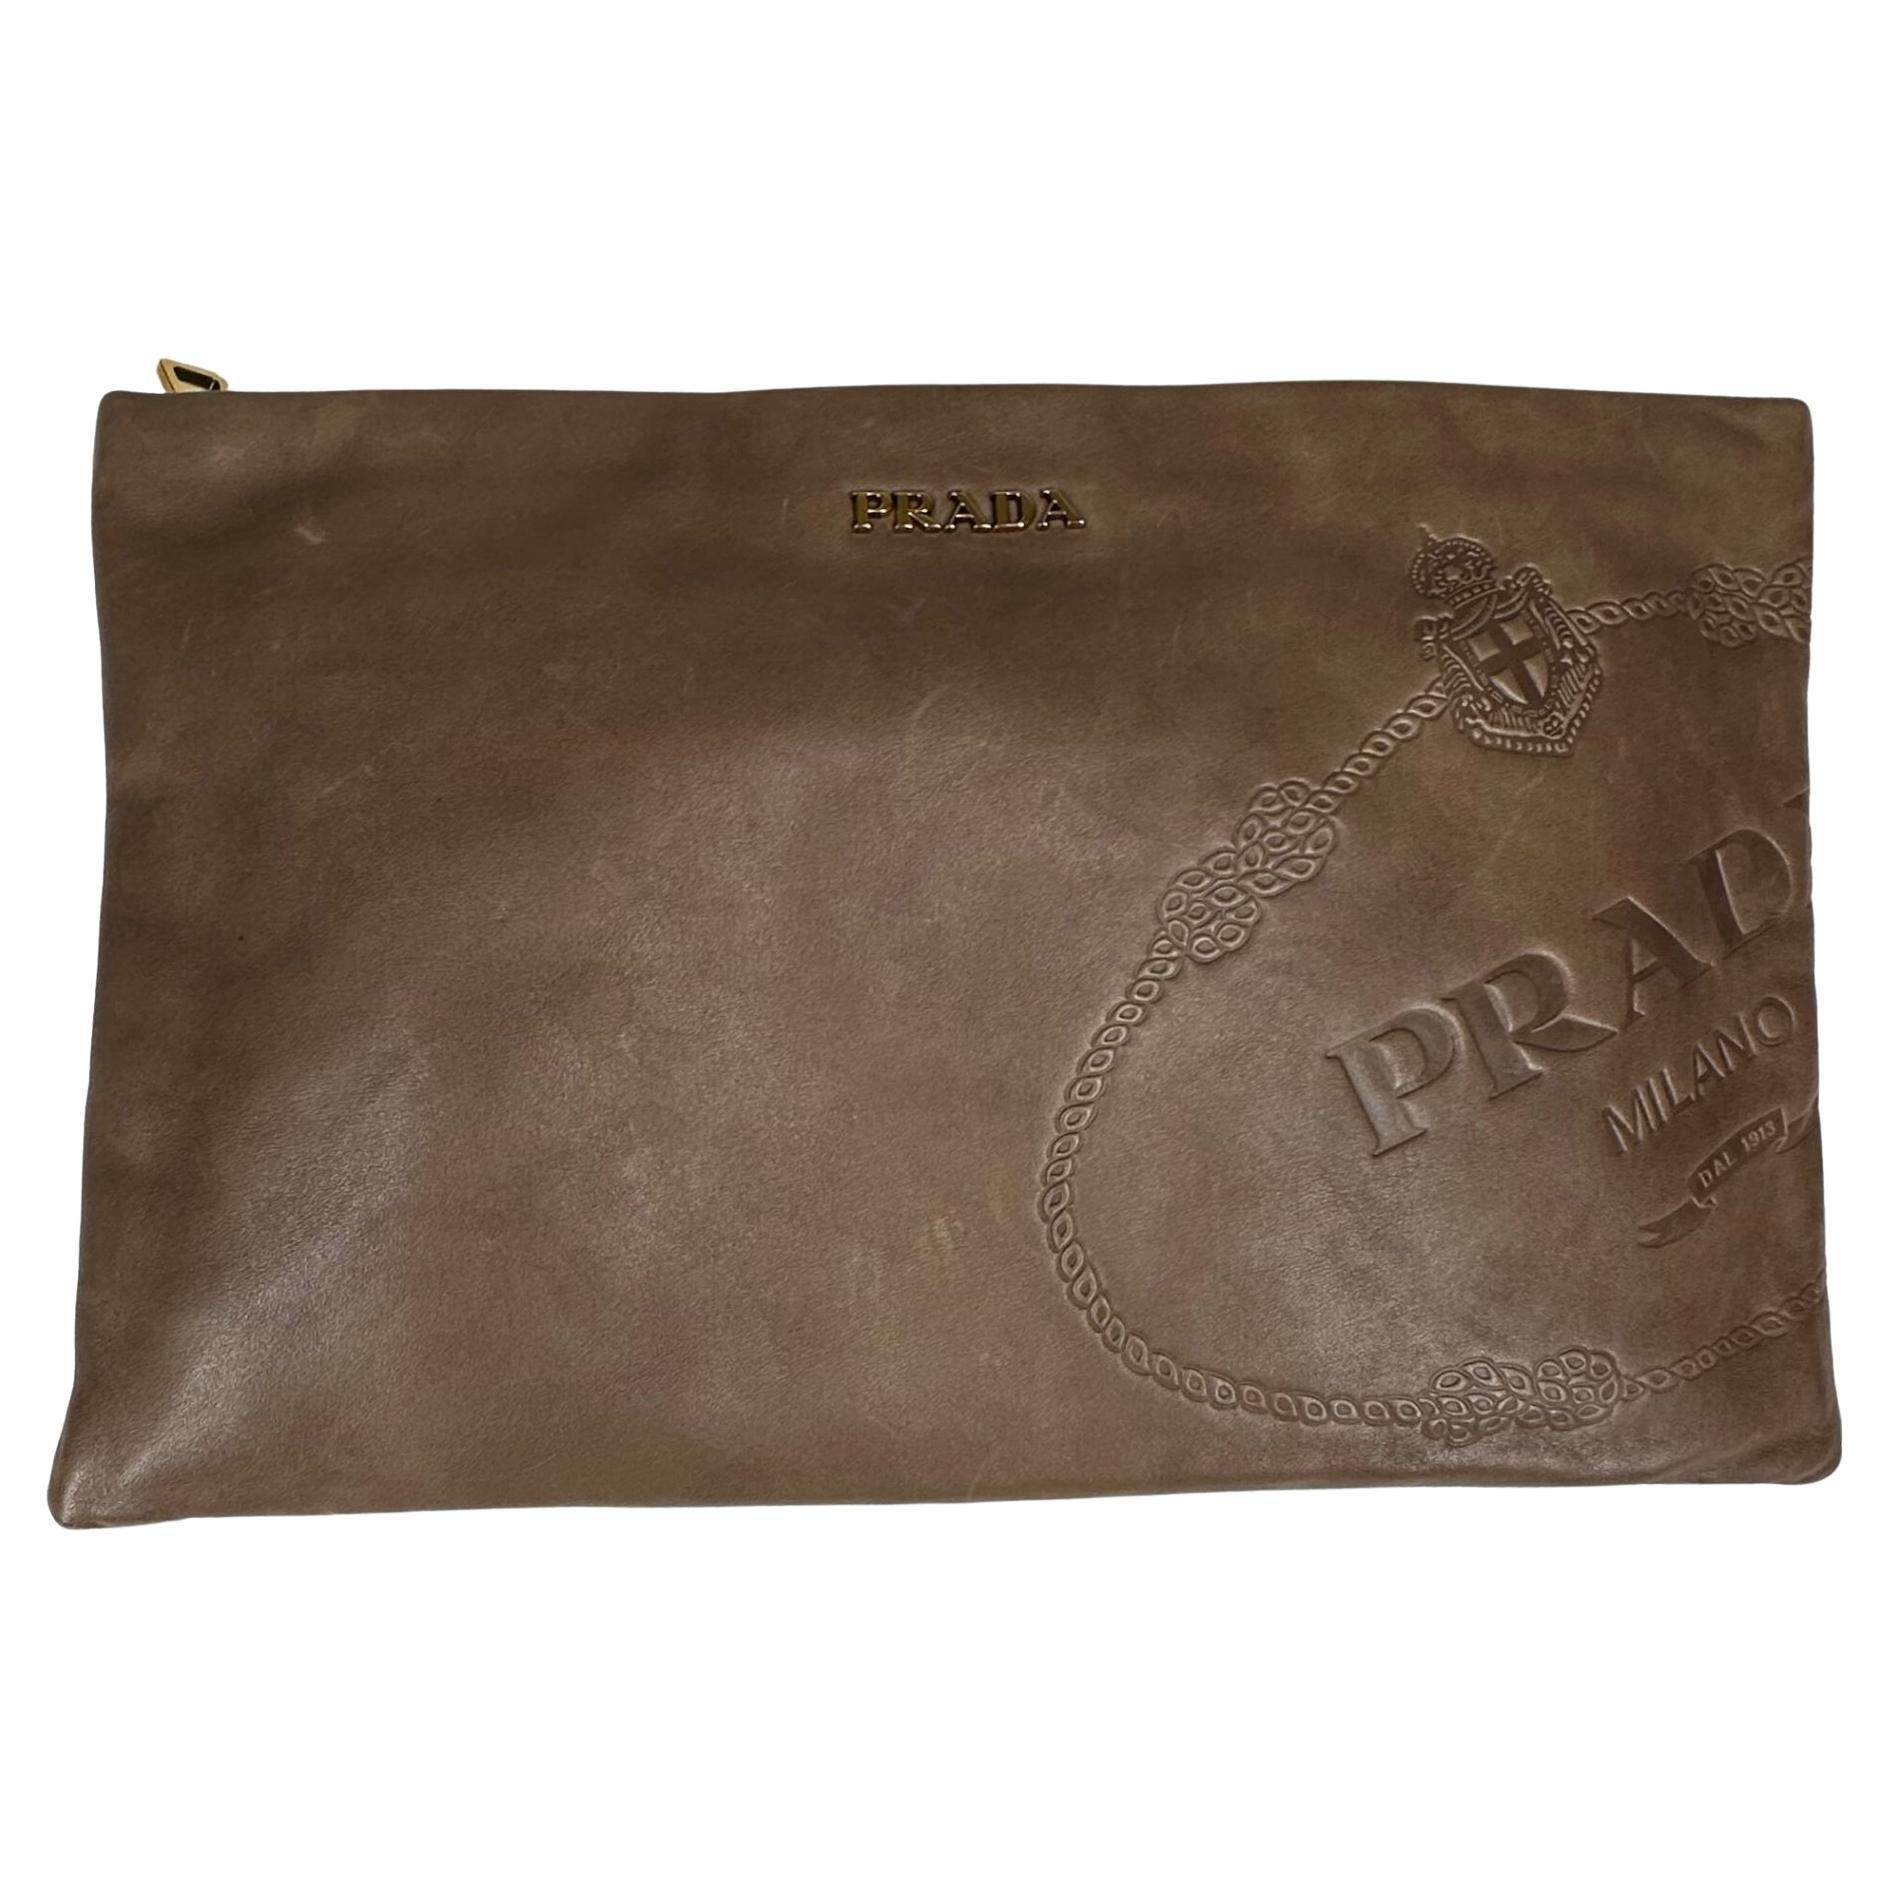 Prada Vintage Brown Portfolio Clutch Bag